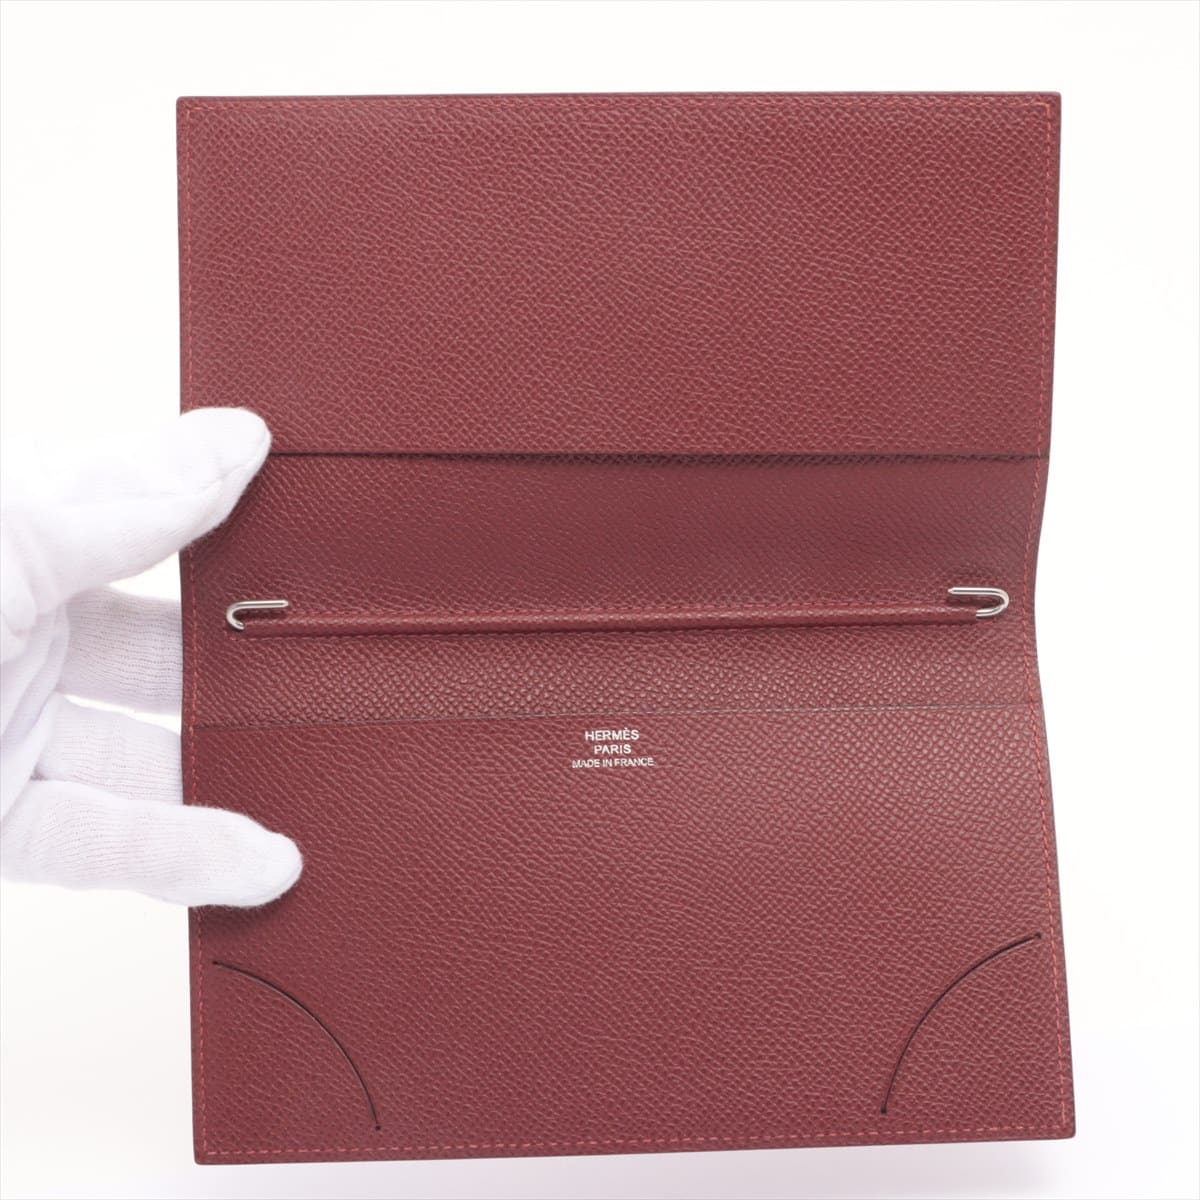 Hermès Agenda Vision Veau Epsom Notebook cover Brown Silver Metal fittings T:2015